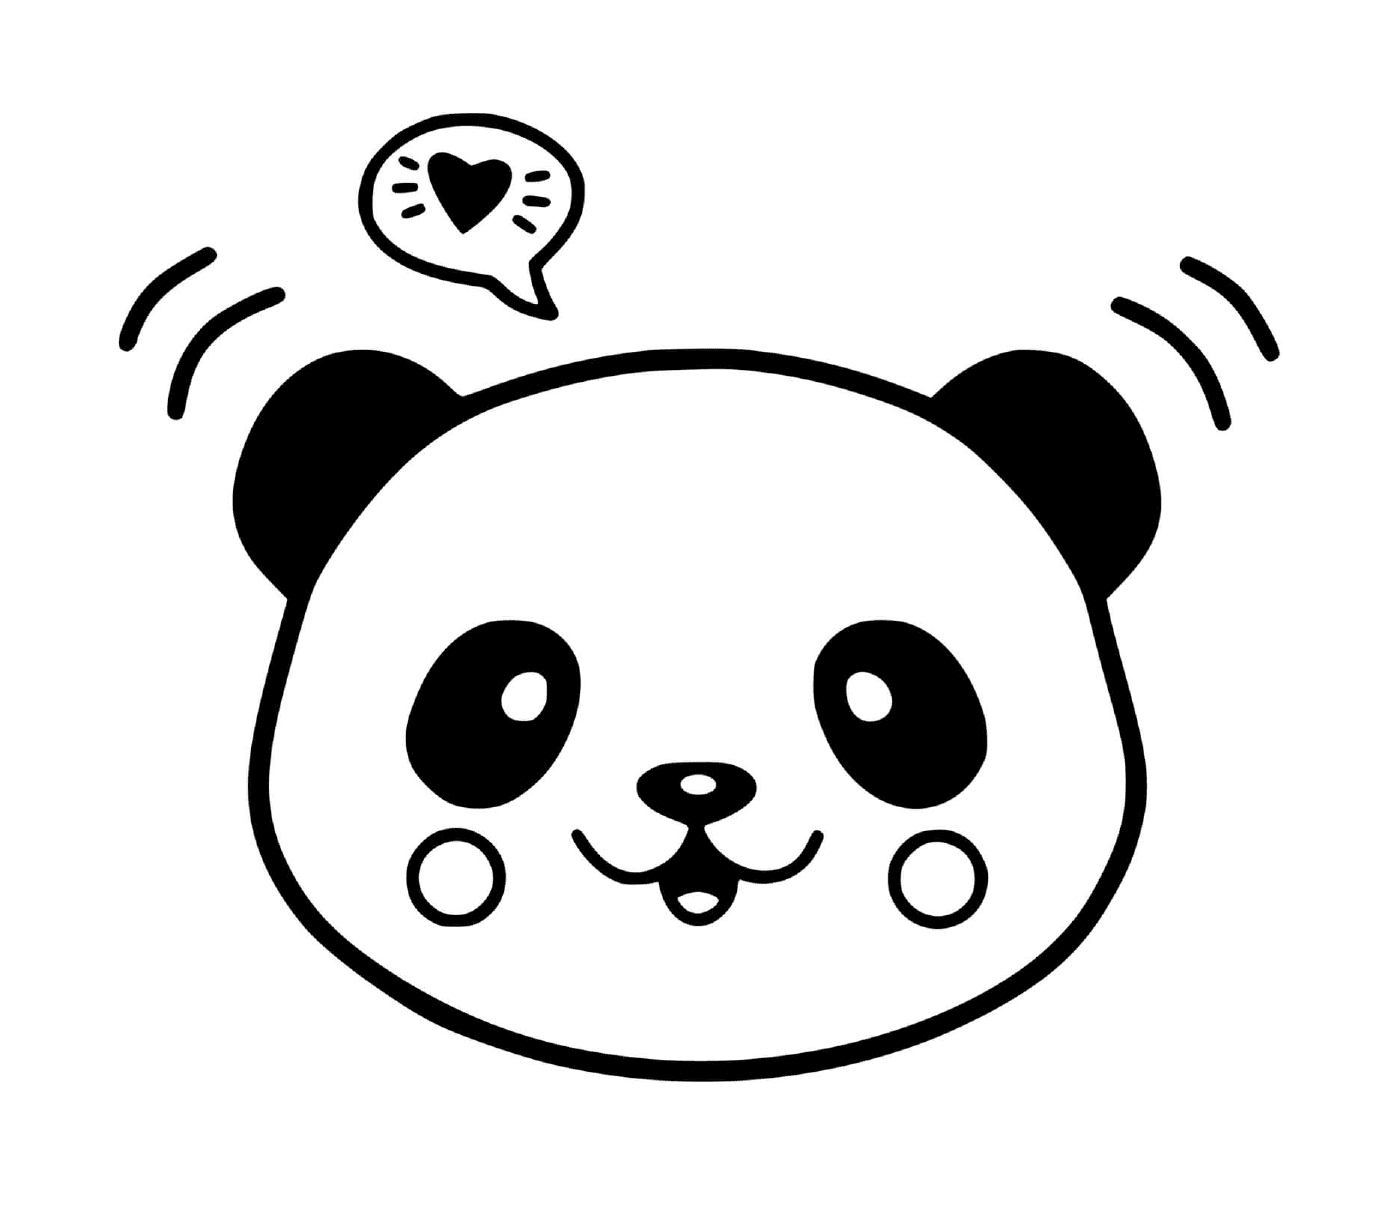  Un panda carino 